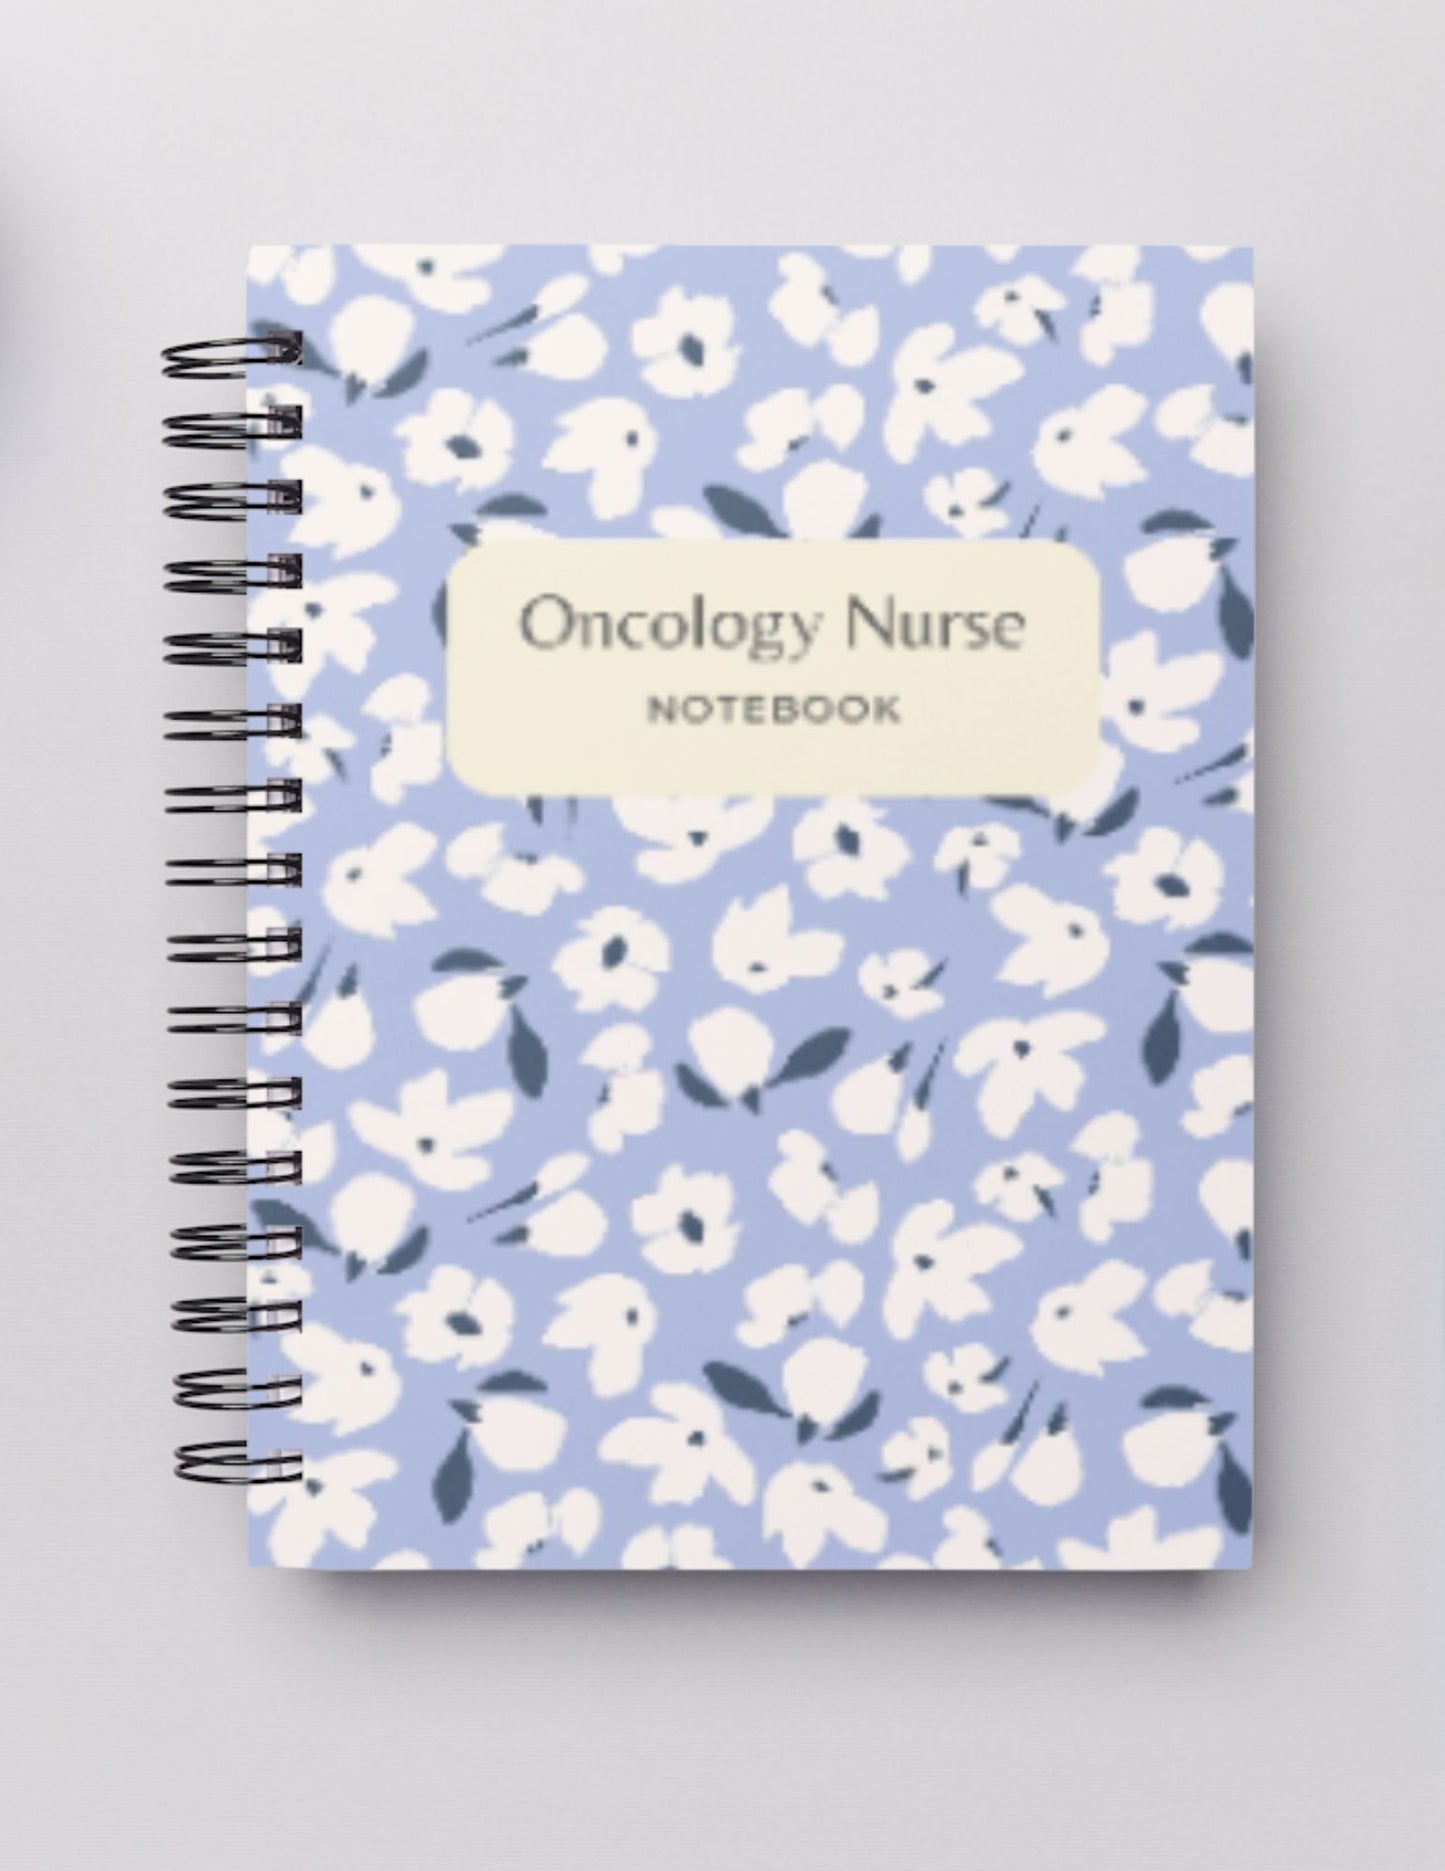 Oncology (1 patient) Nurse Report Notebook